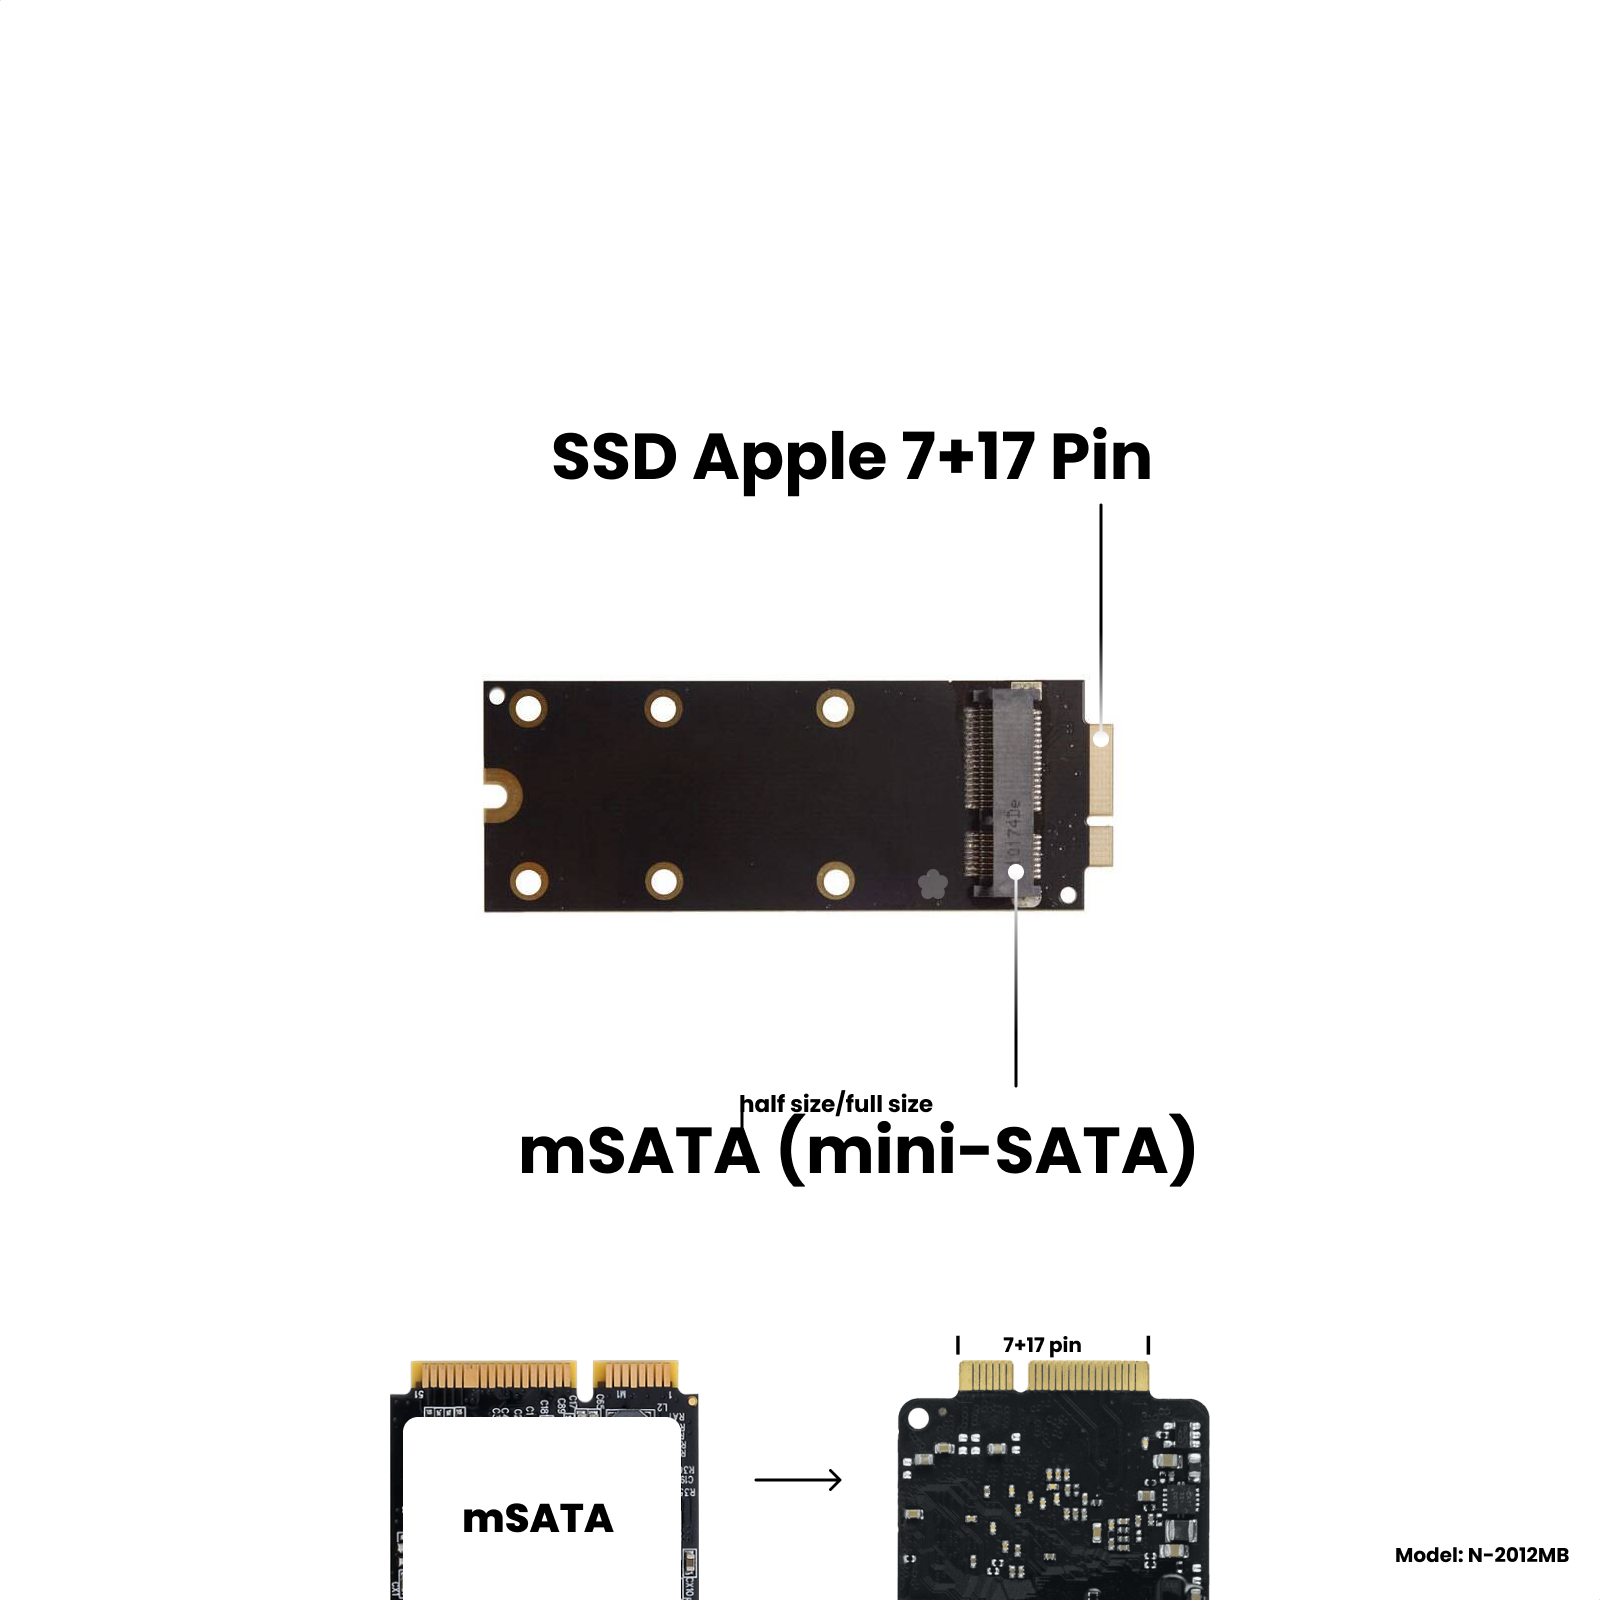 Адаптер-переходник для установки SSD mSATA (mini-SATA) в разъем 7+17 Pin на MacBook Pro Retina 13/15" iMac 21.5/27" Mid 2012 - Early 2013 черный